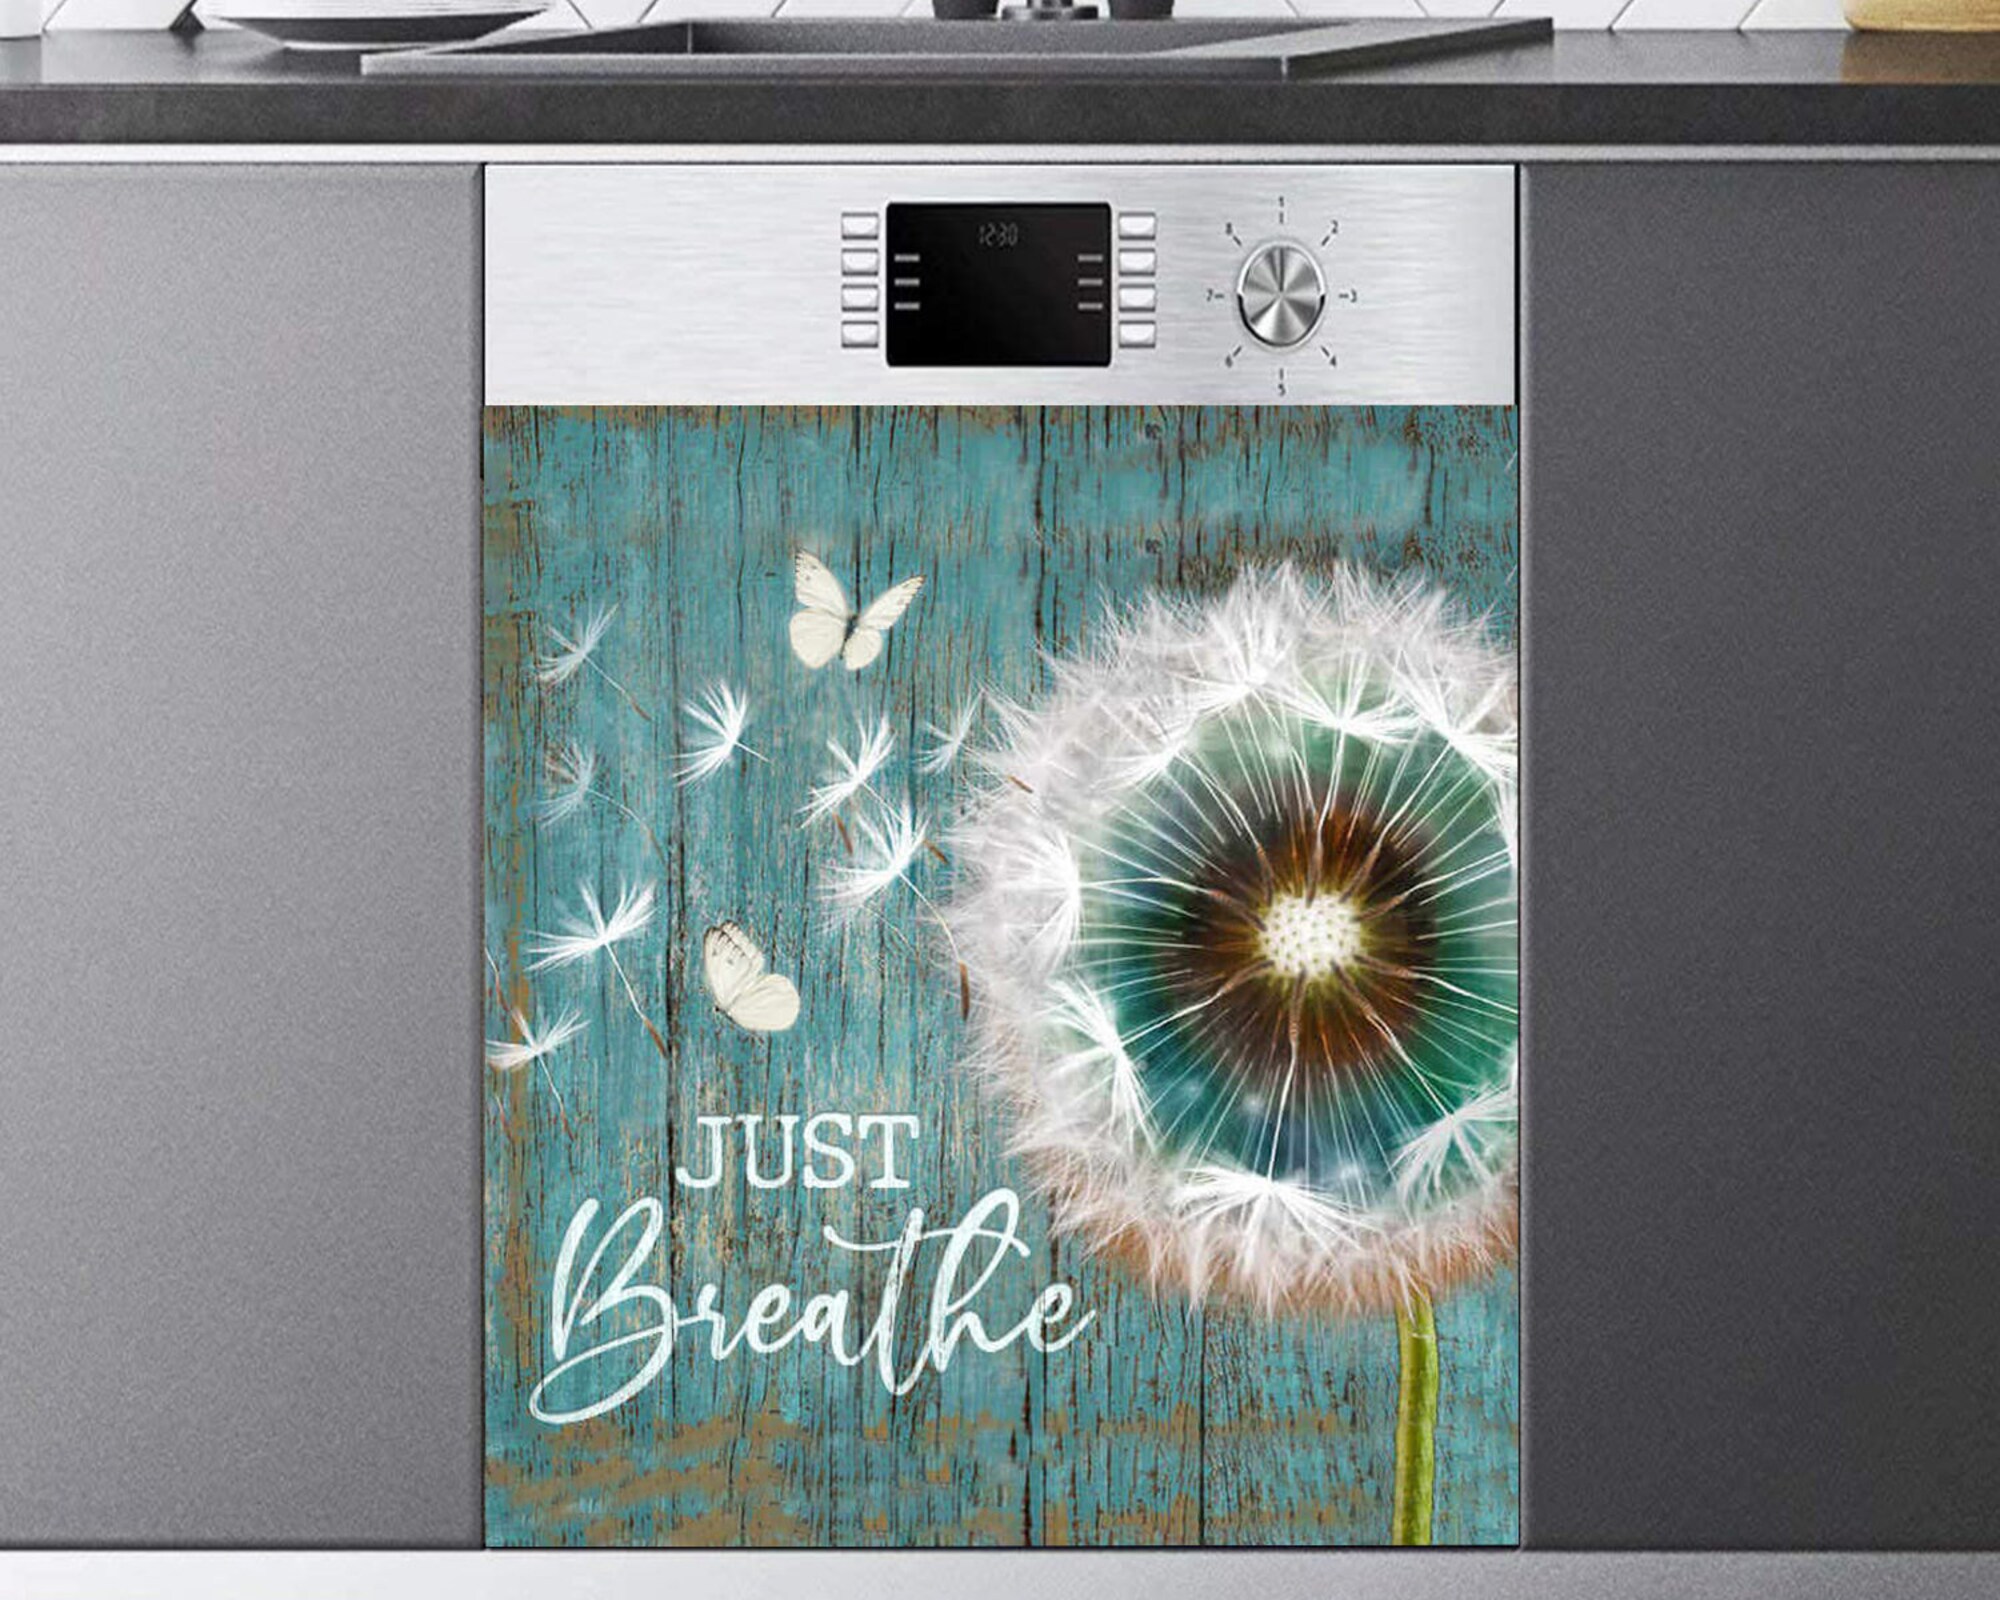 Just Breathe, Dishwasher cover